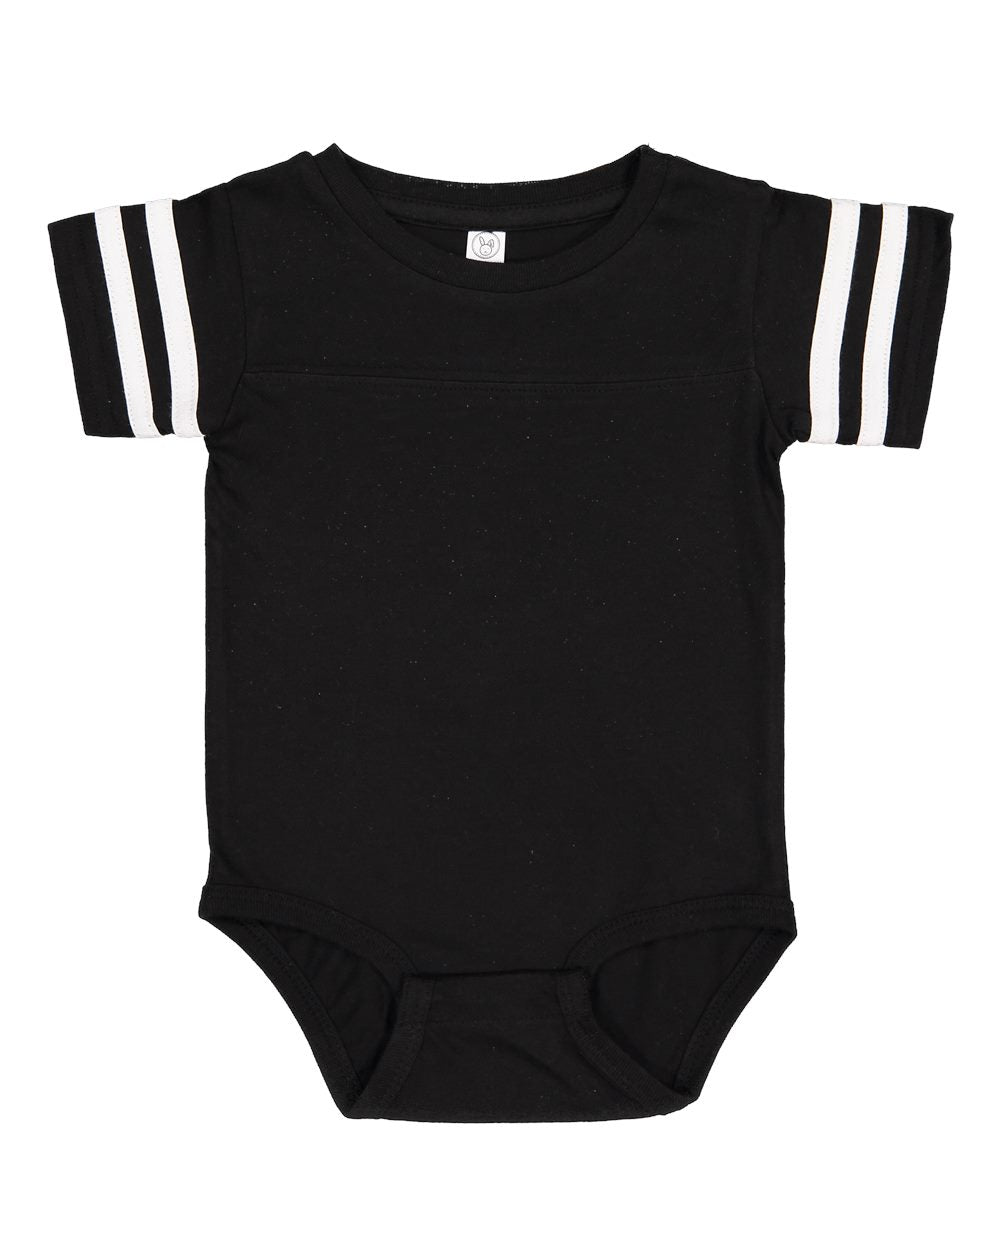 rabbit skins infant football jersey bodysuit black solid white